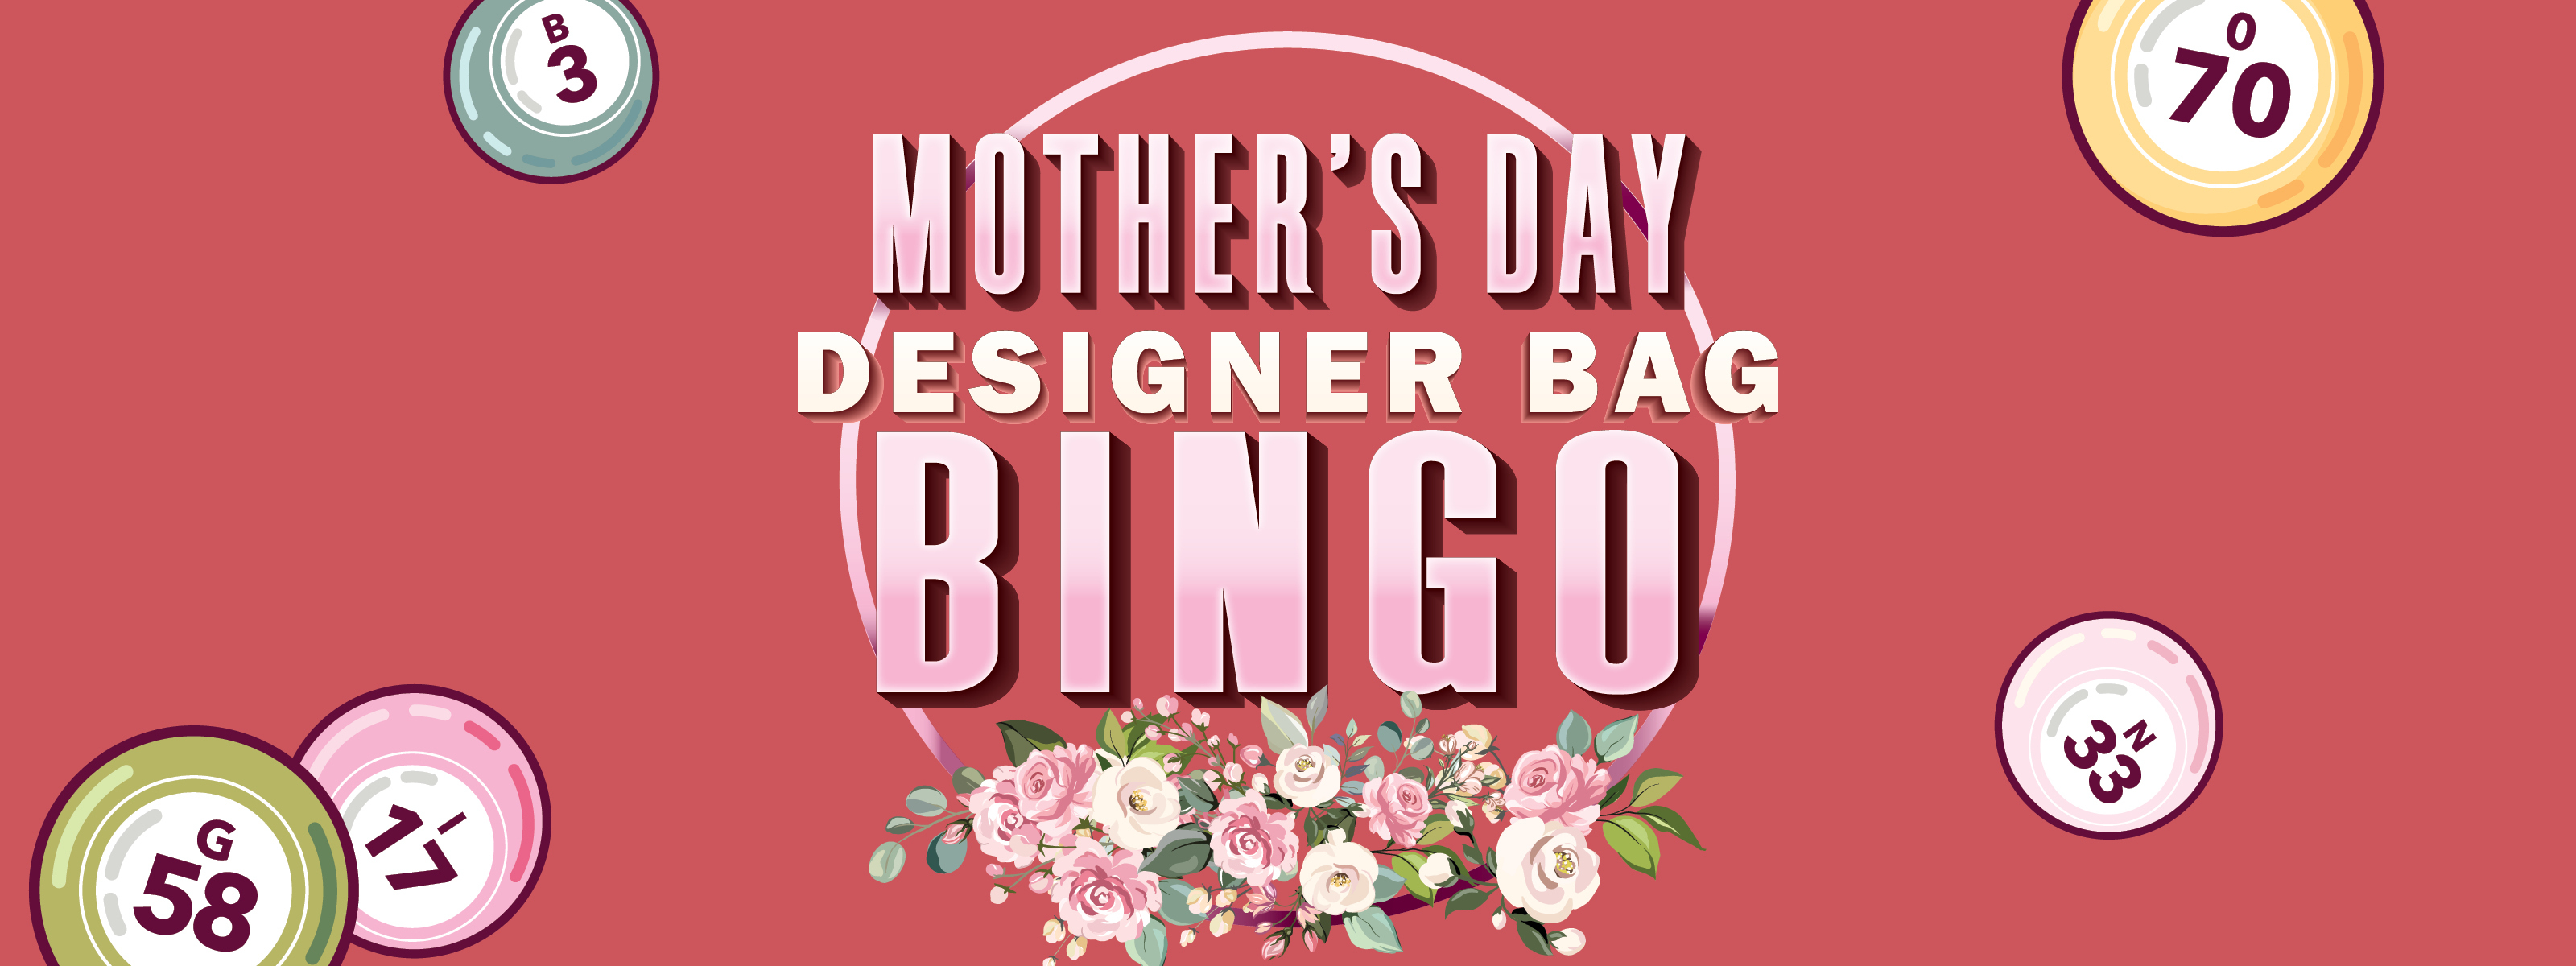 Mother's Day Designer Bag Bingo